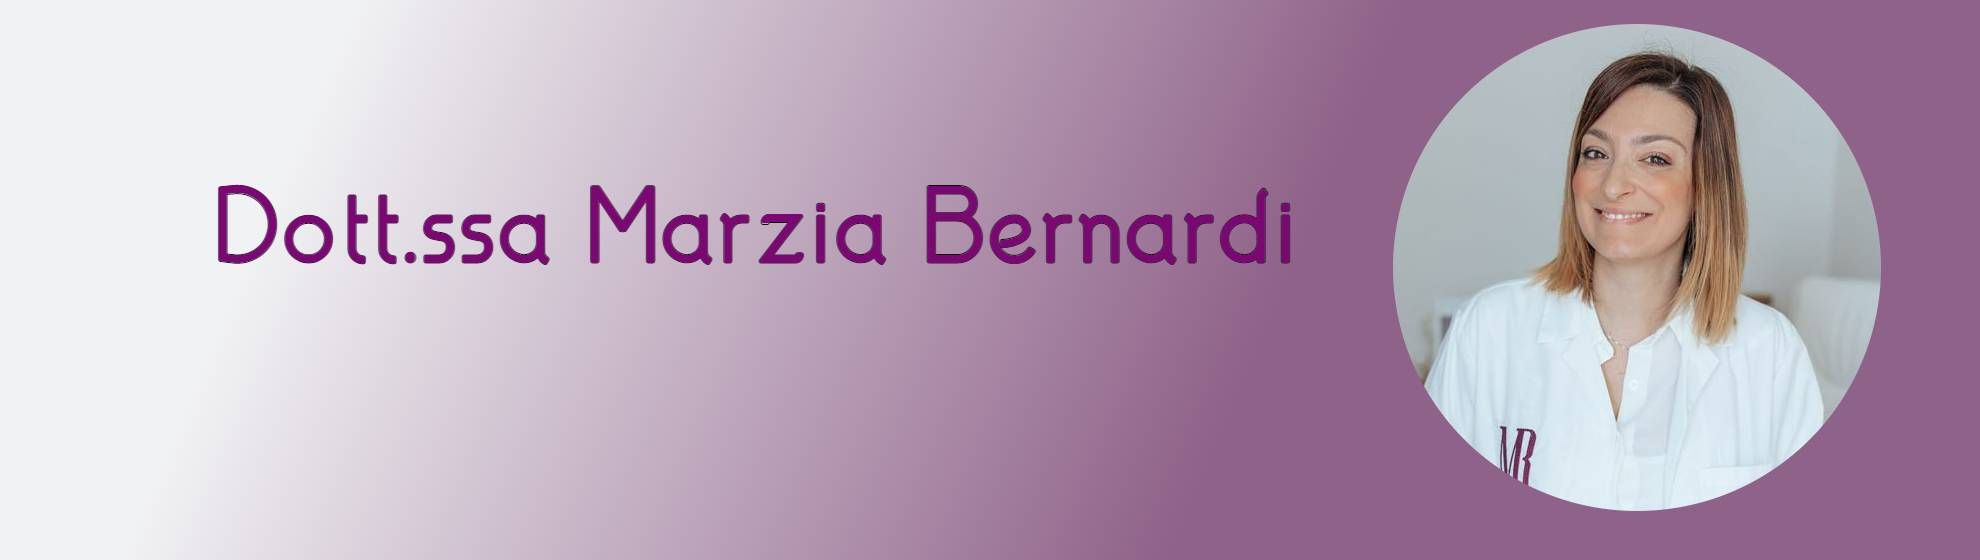 Dott.ssa Marzia Bernardi